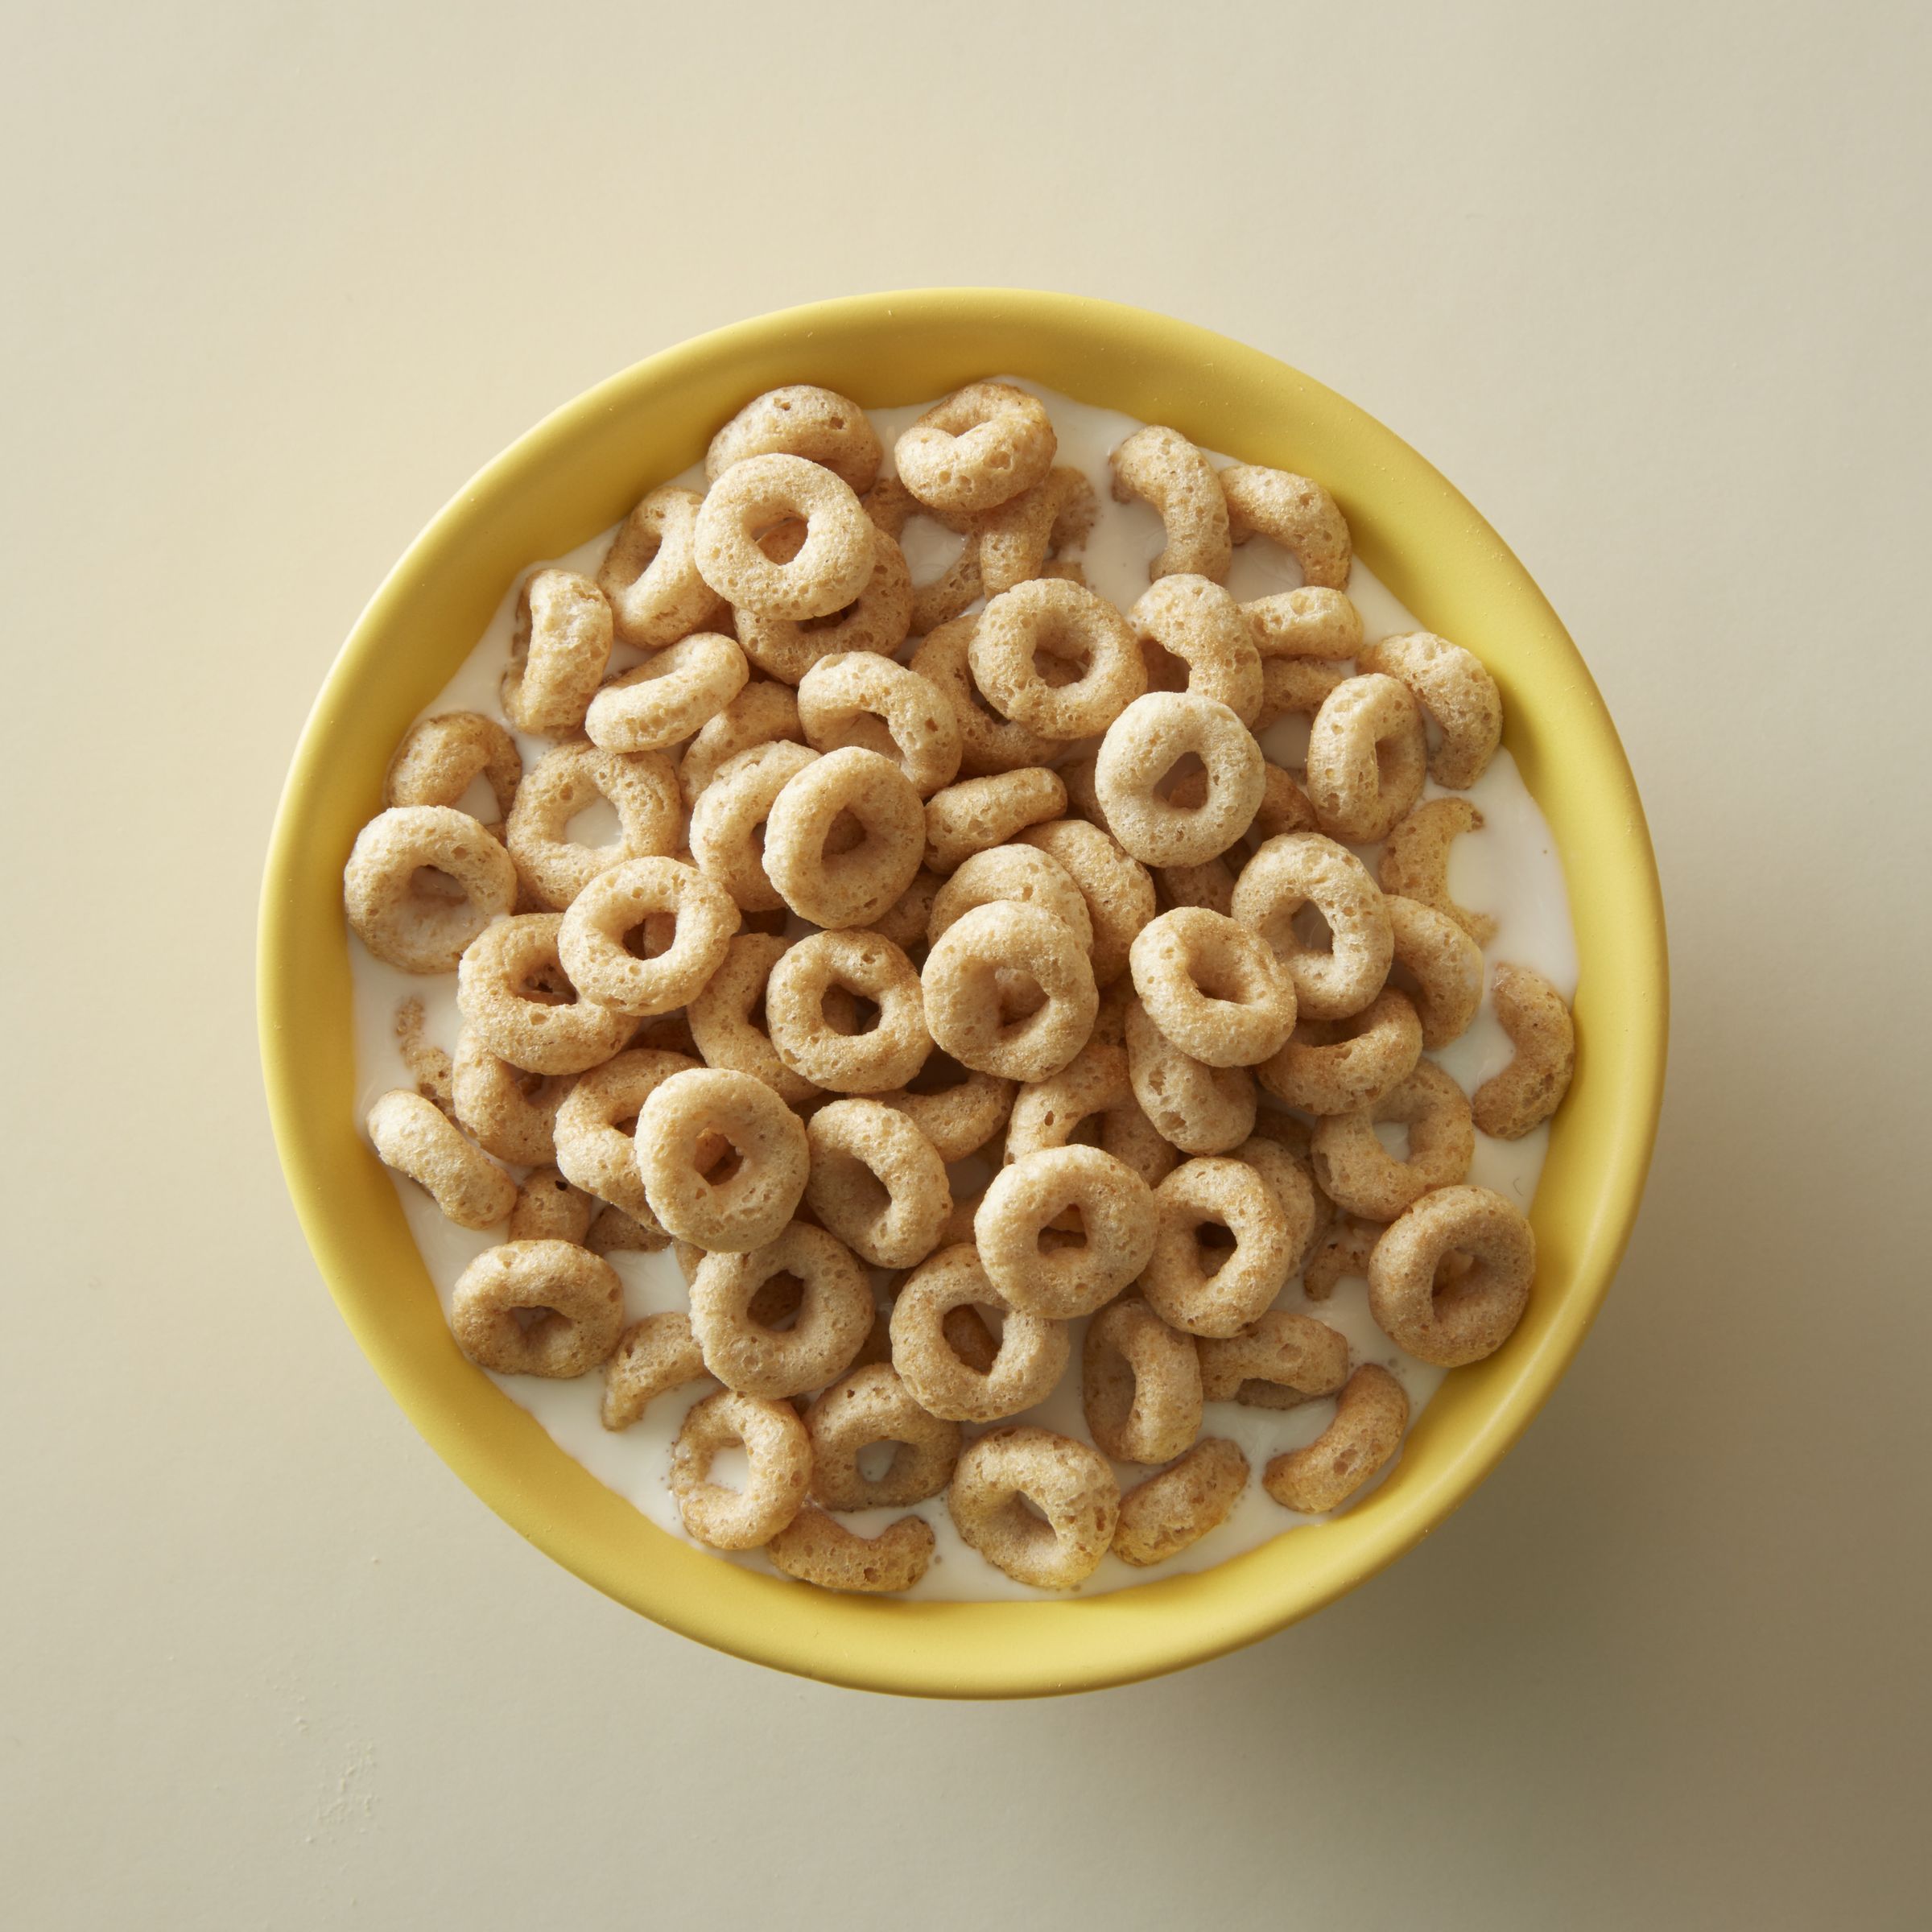 Cheerios Honey Nut Cereal 10.8 oz General Mills